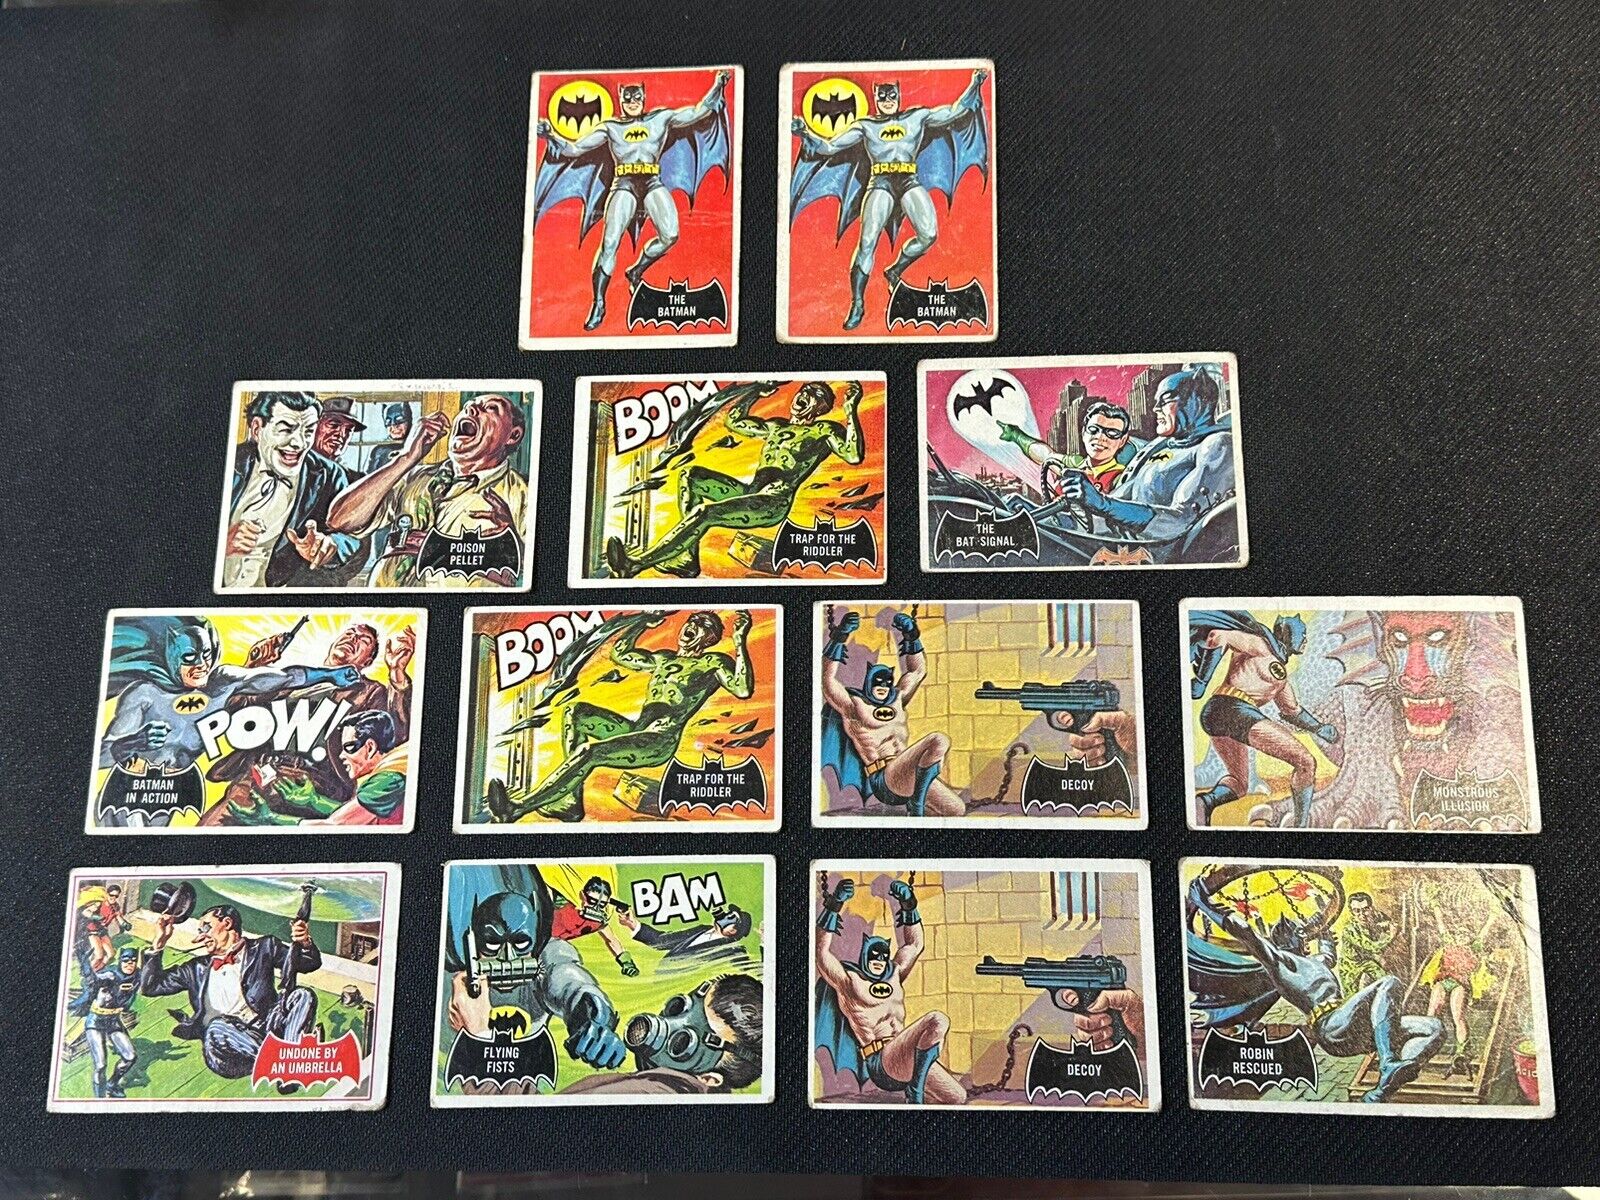 1966 Topps Batman Black Bat Card Lot Of 13 Total Cards - (2x Batman Black Bat)